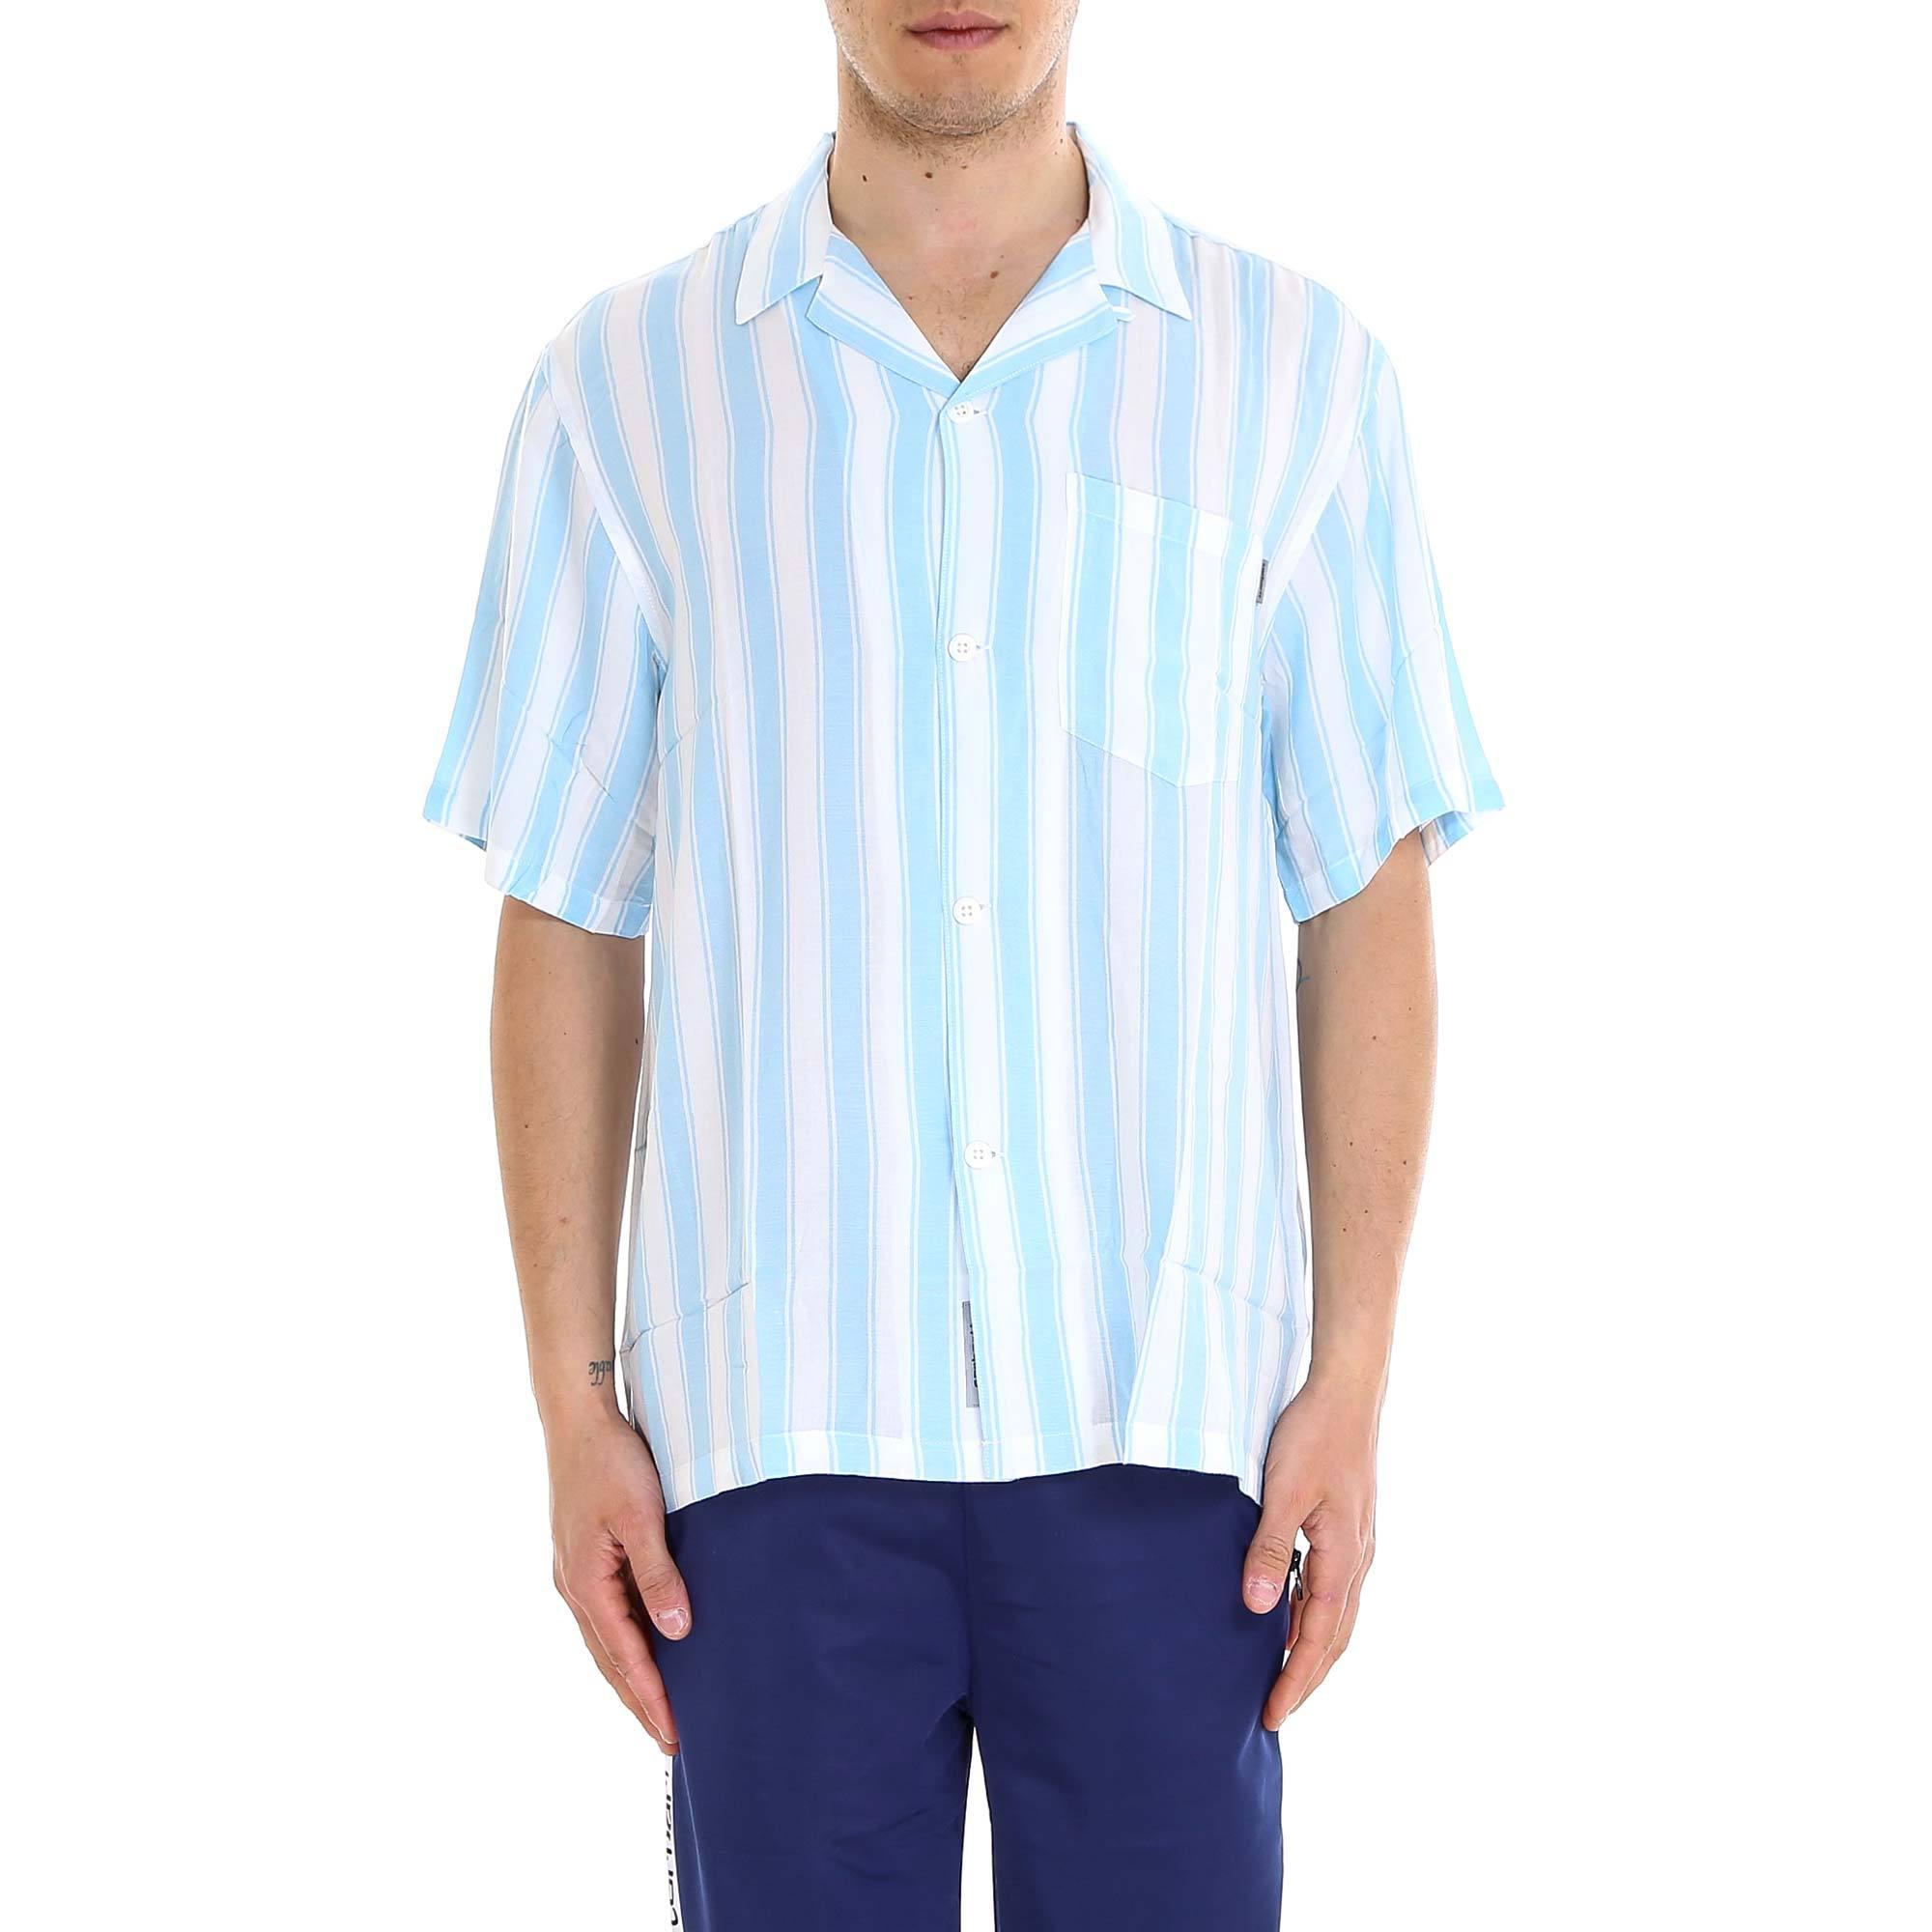 Carhartt WIP Denim Esper Striped Shirt in Blue for Men - Lyst